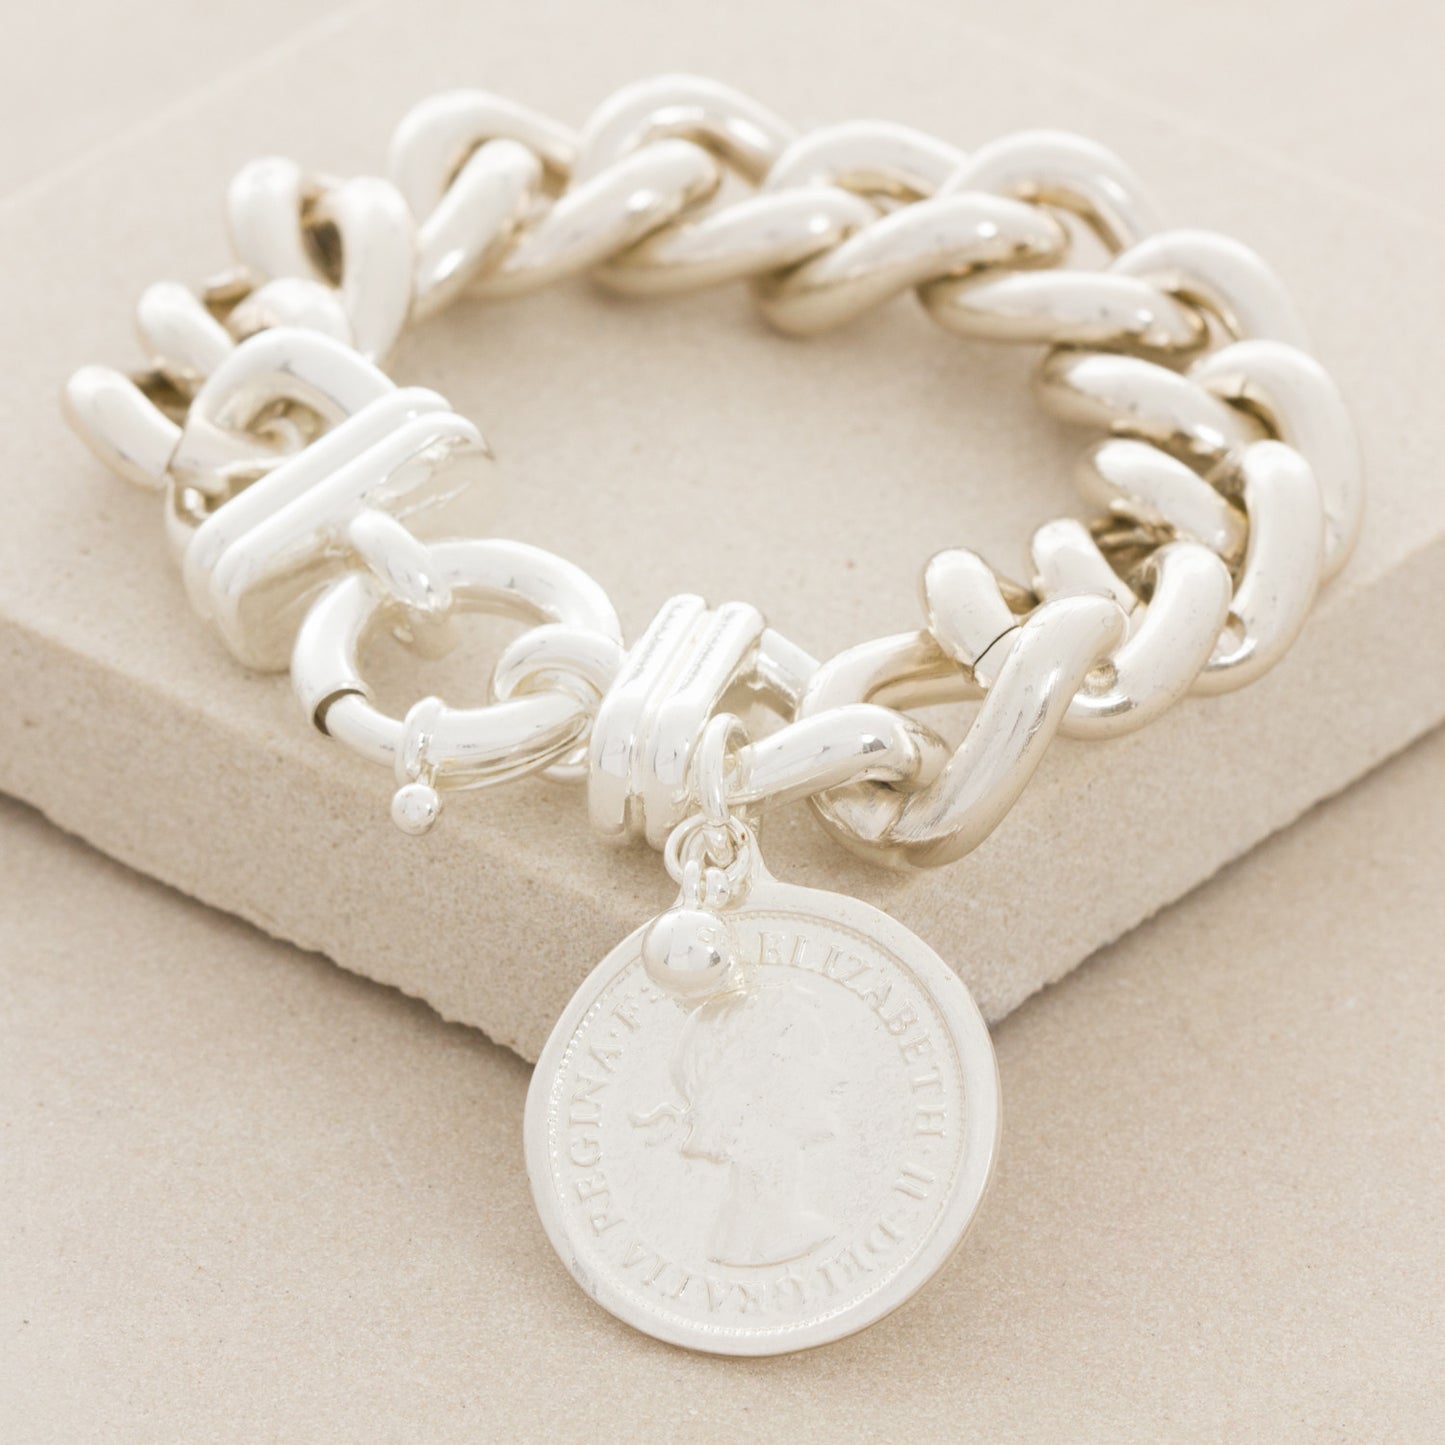 Coin Charm Chain Bracelet